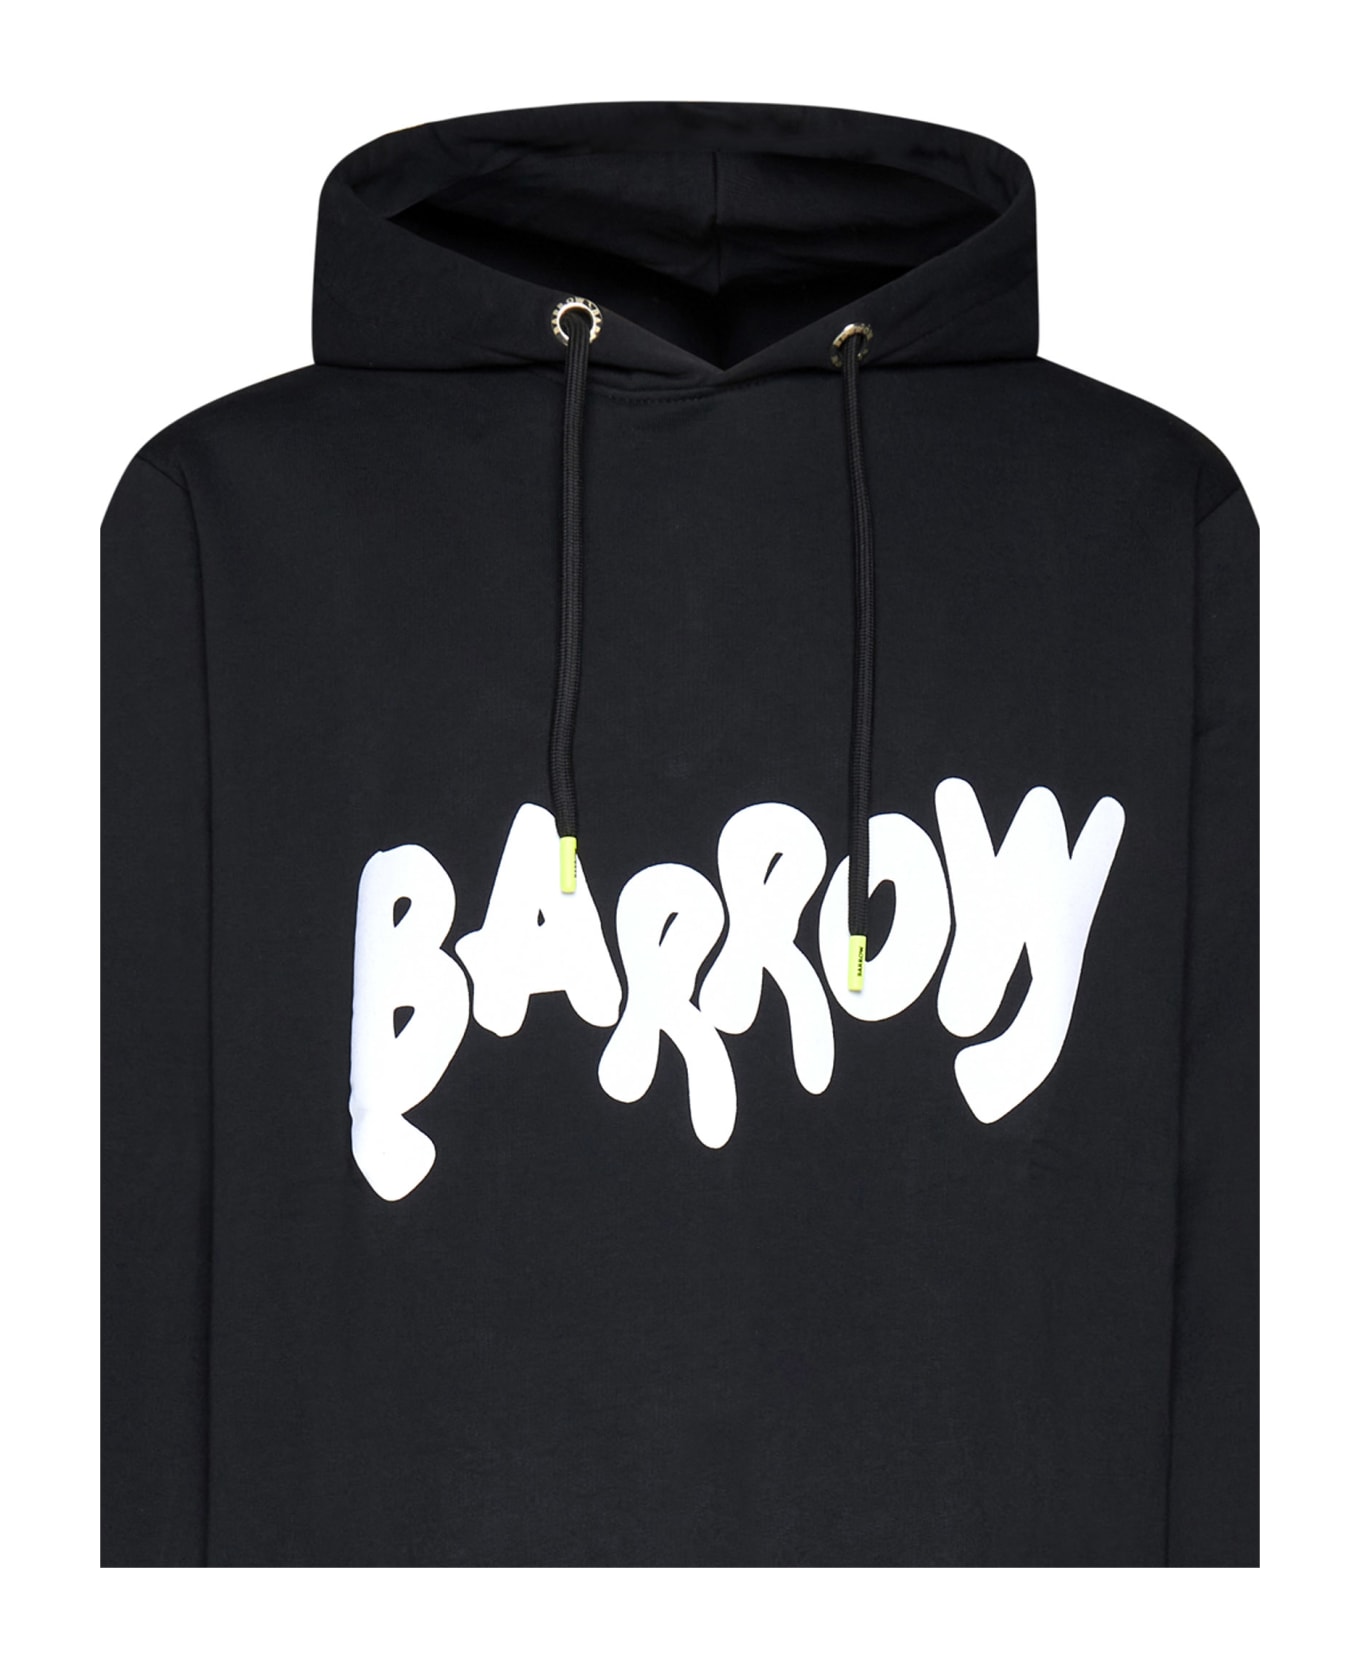 Barrow Black Hoodie With Contrast Lettering Logo - Black フリース